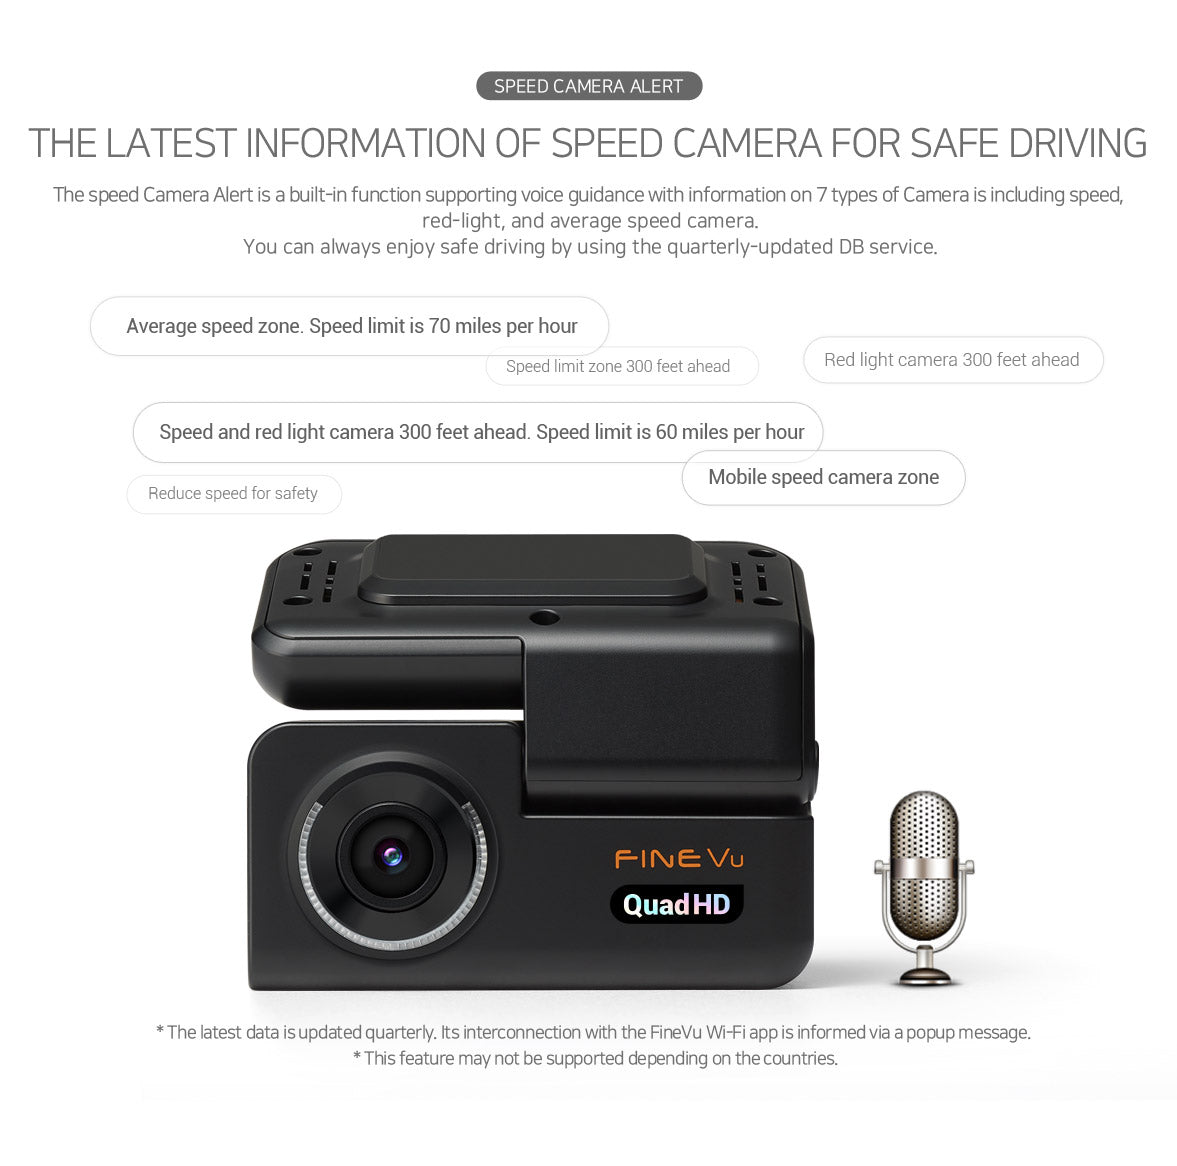 New Year Sale: Unavi FineVu GX300 | 2 Channel Dash Cam | 2K QHD | GPS &  WiFi built-in | 32 GB SD Card